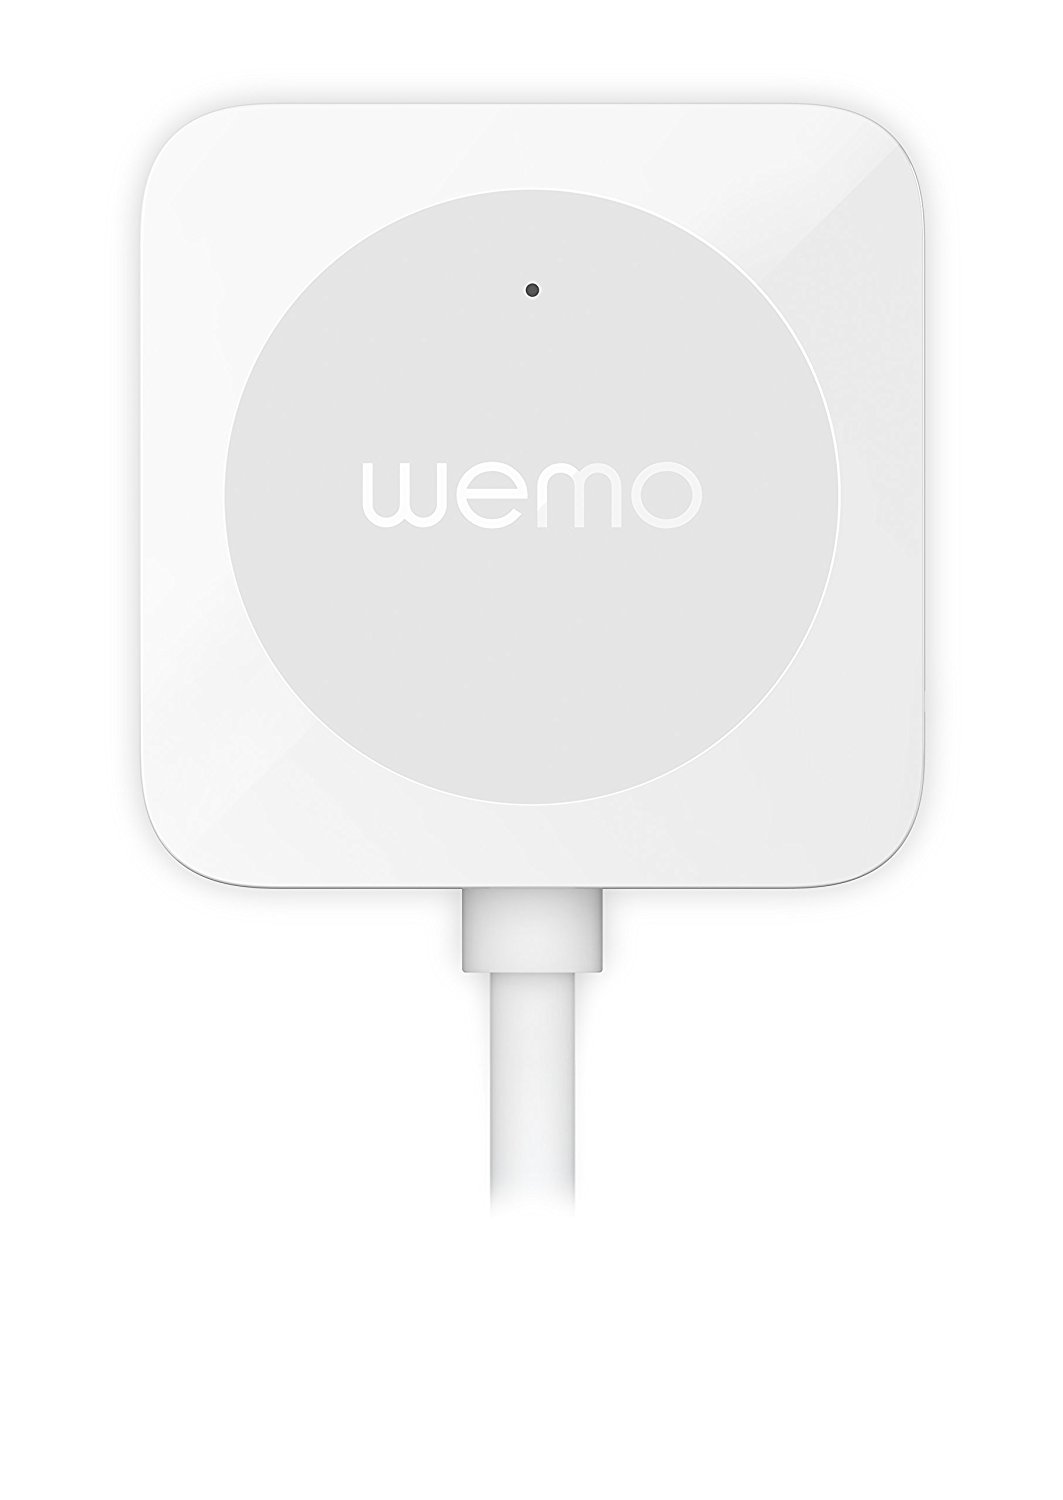 Wemo Now Supports Apple HomeKit